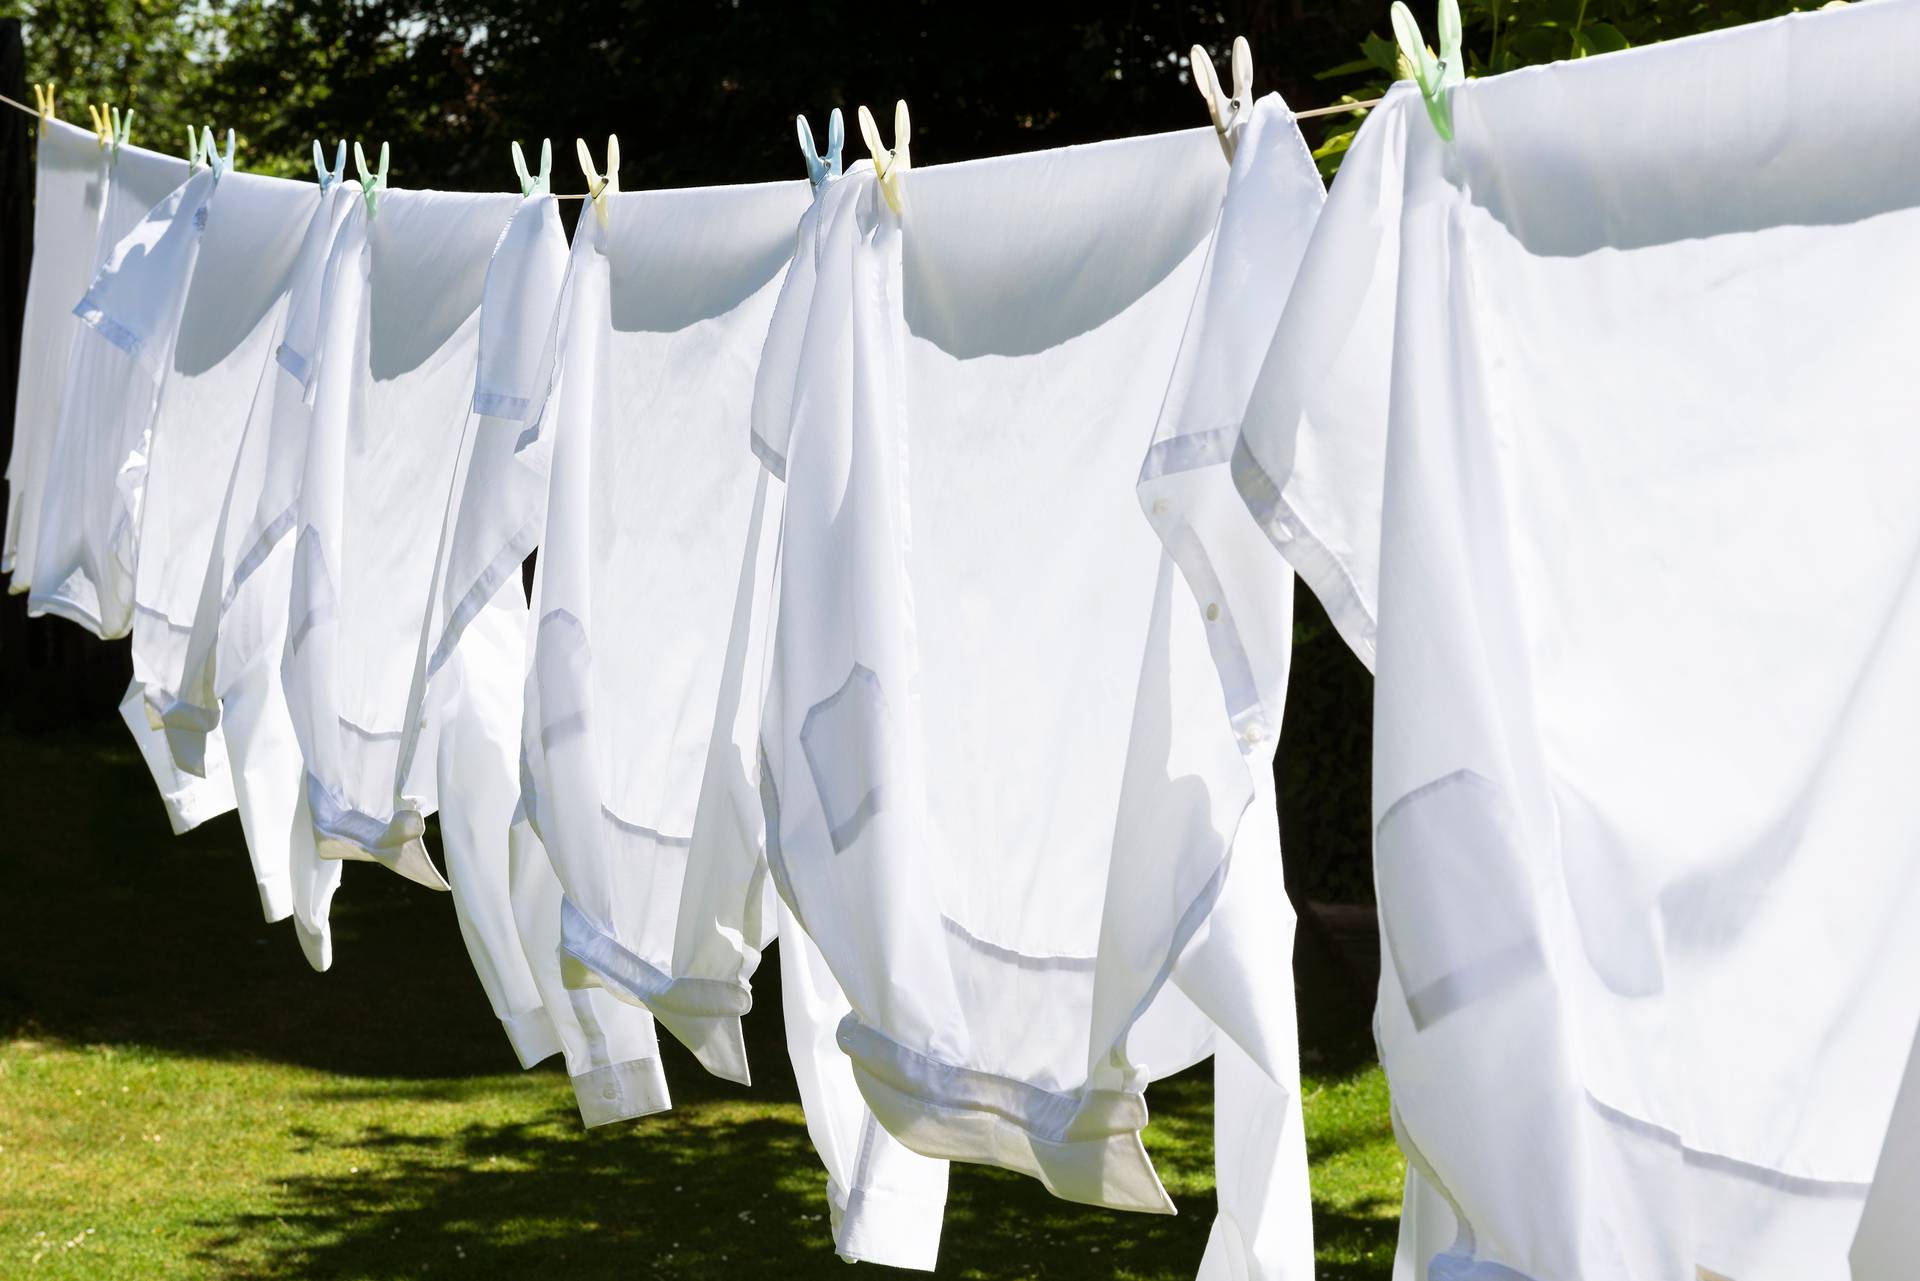 Drying your washing